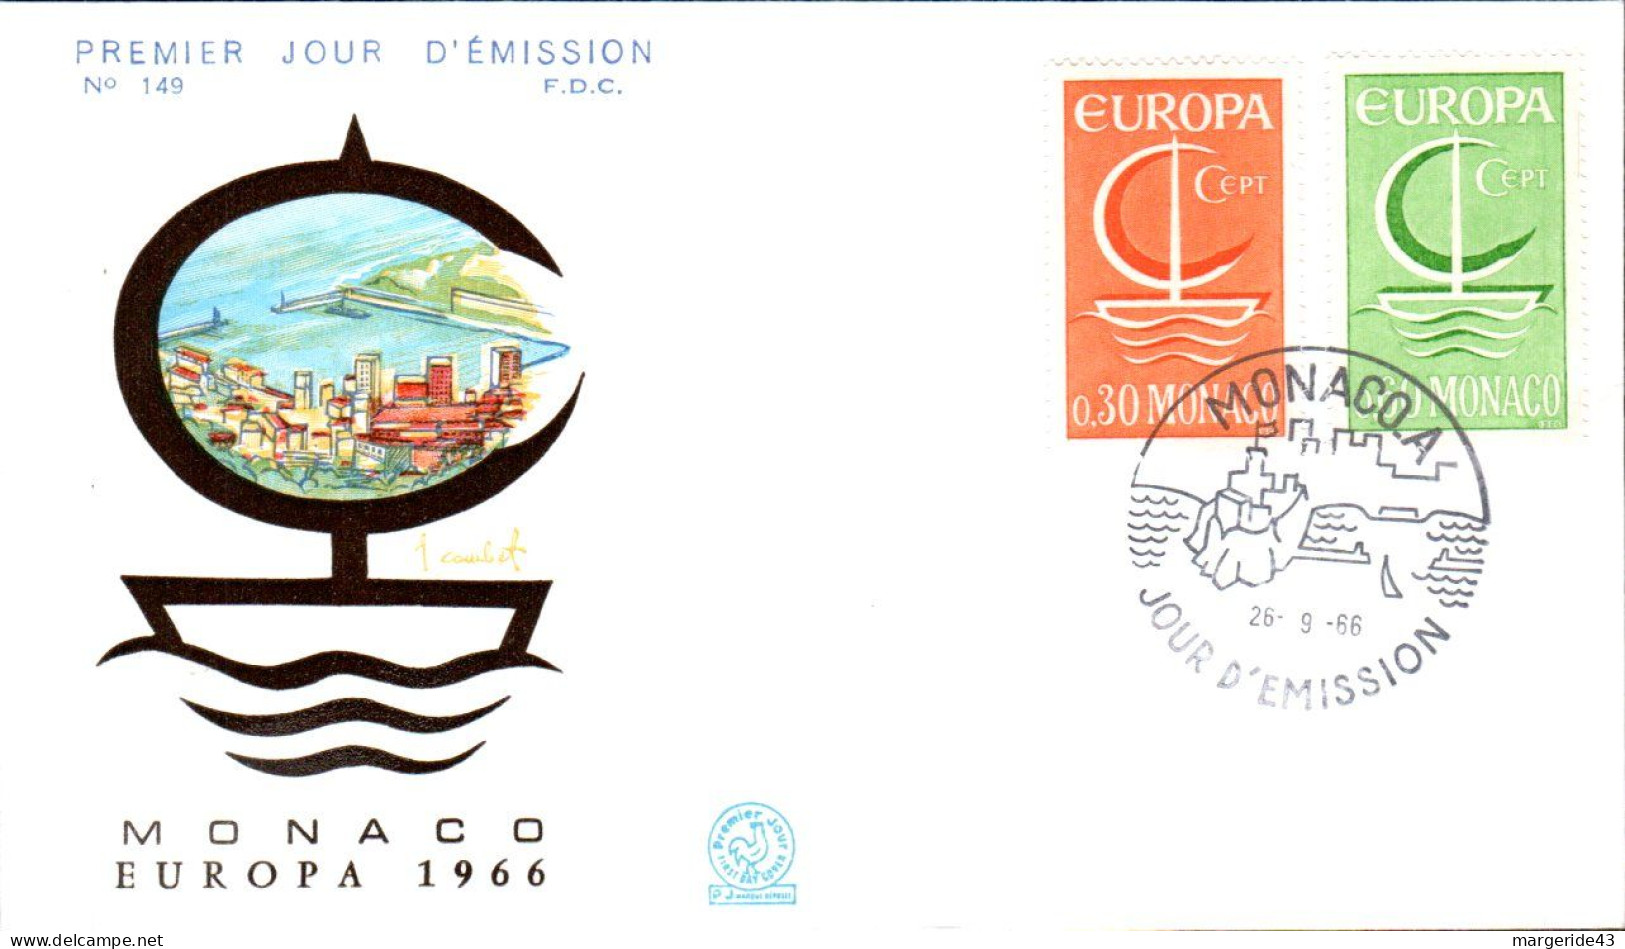 EUROPA 1966 MONACO FDC - 1966